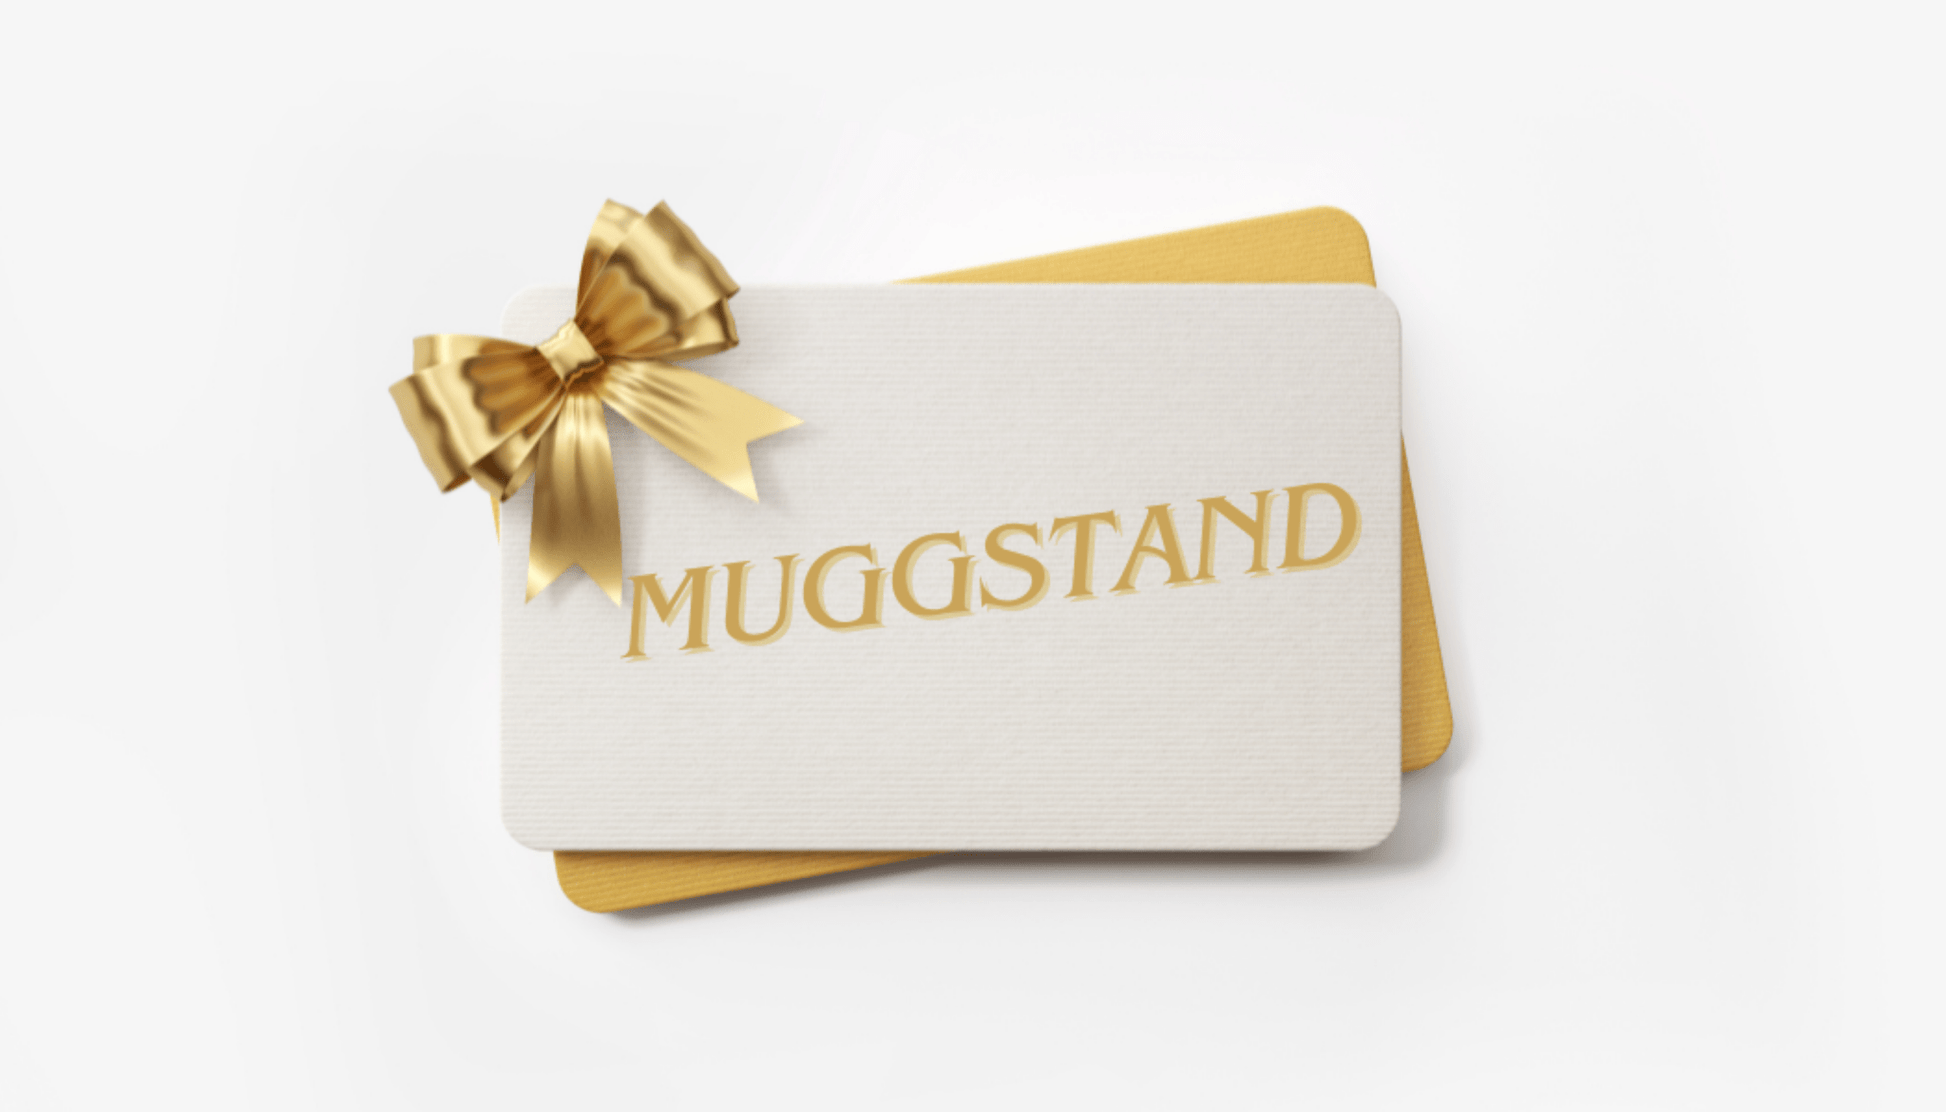 Muggstand Gift Card - Muggstand